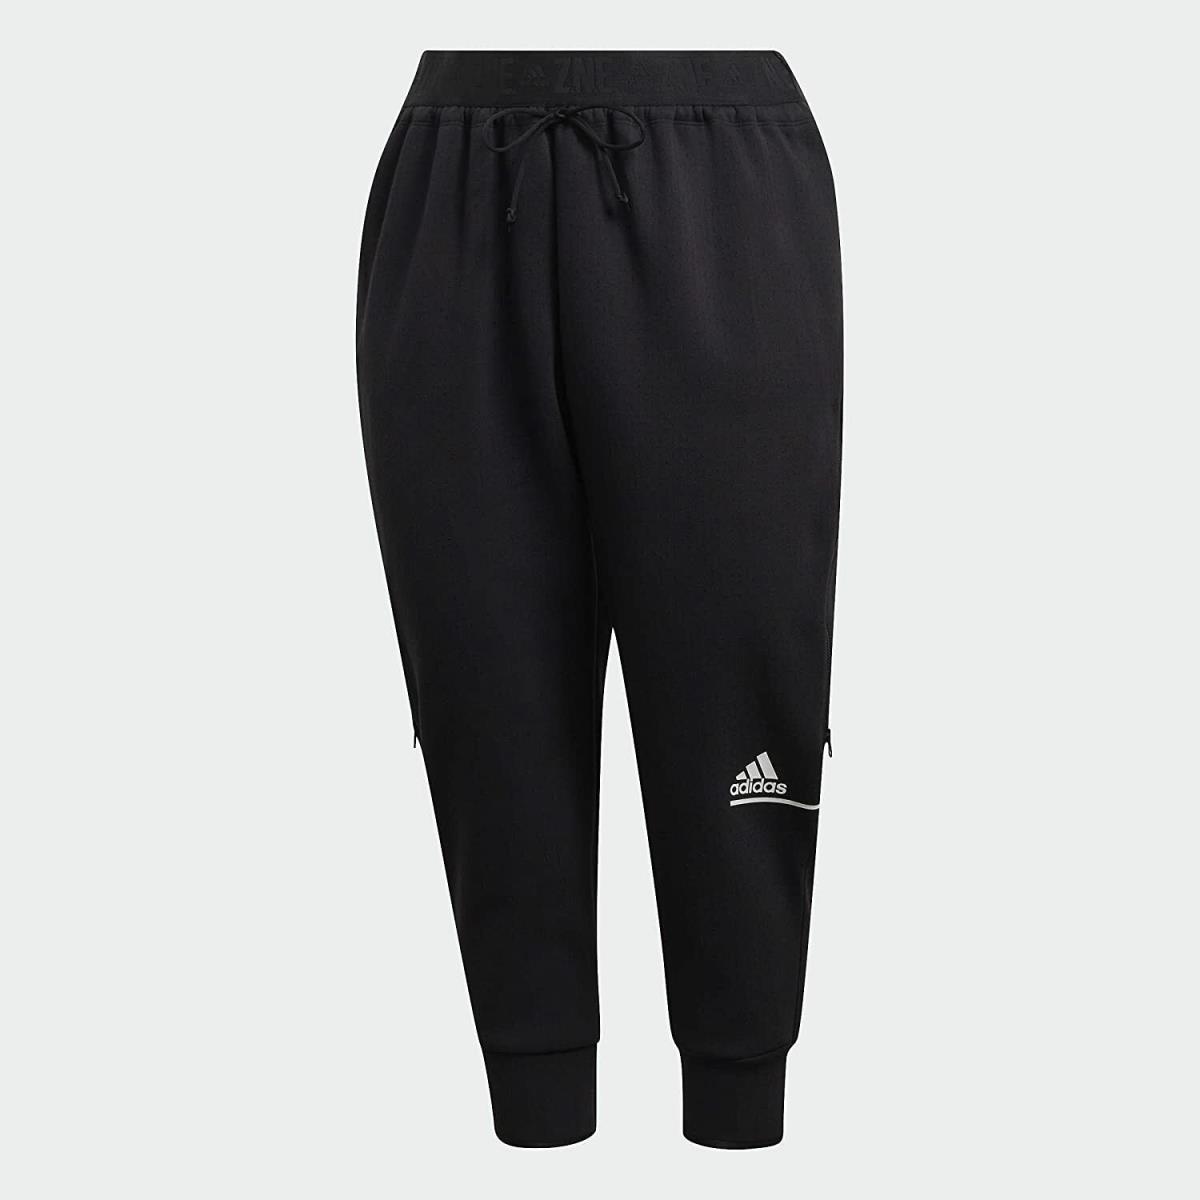 Adidas clothing  - Black 3